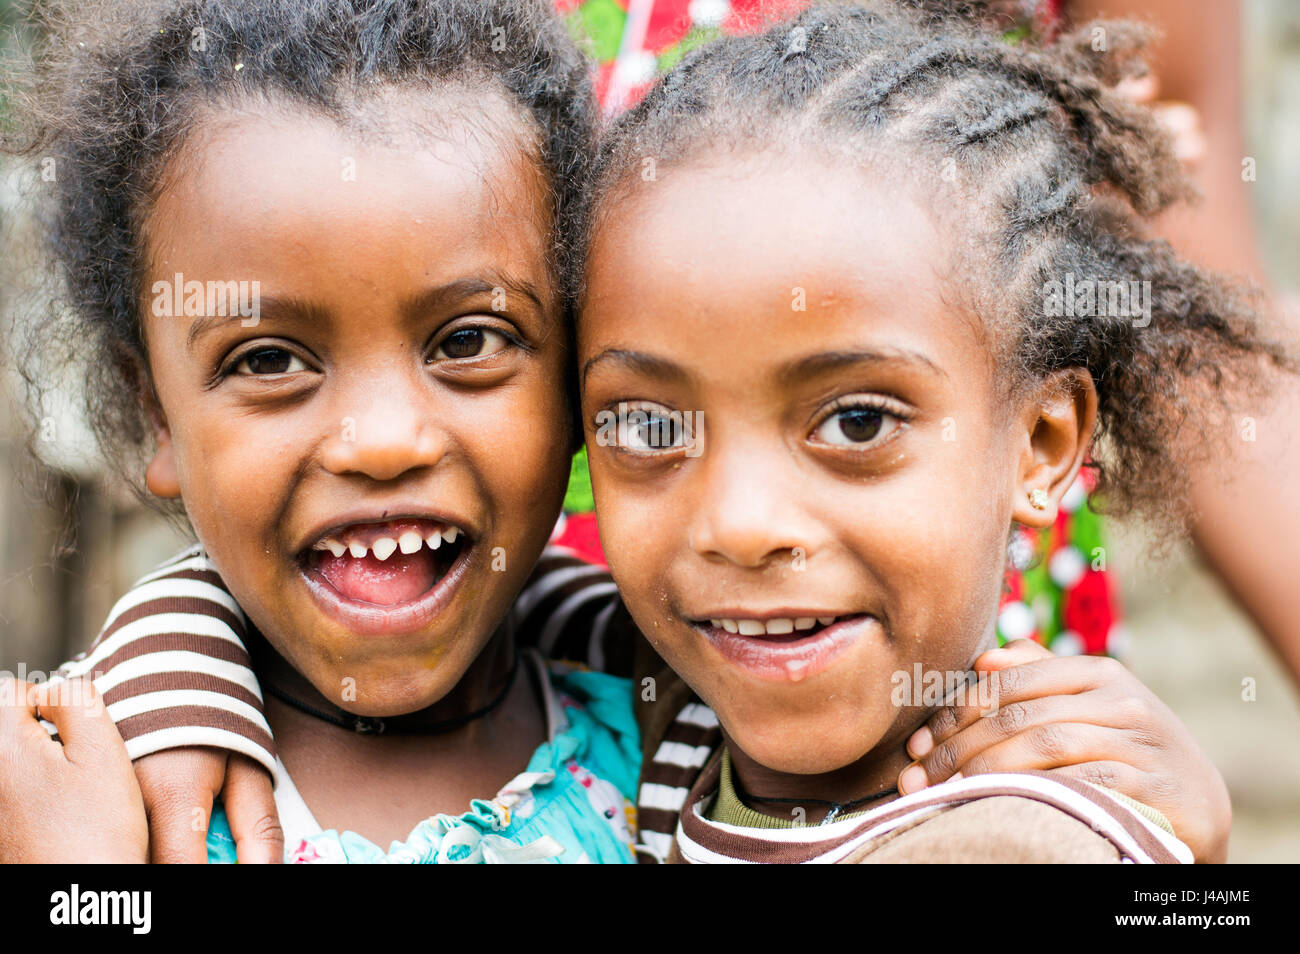 Small girls in slum area back of Piazza, Addis Ababa, Ethiopia Stock Photo